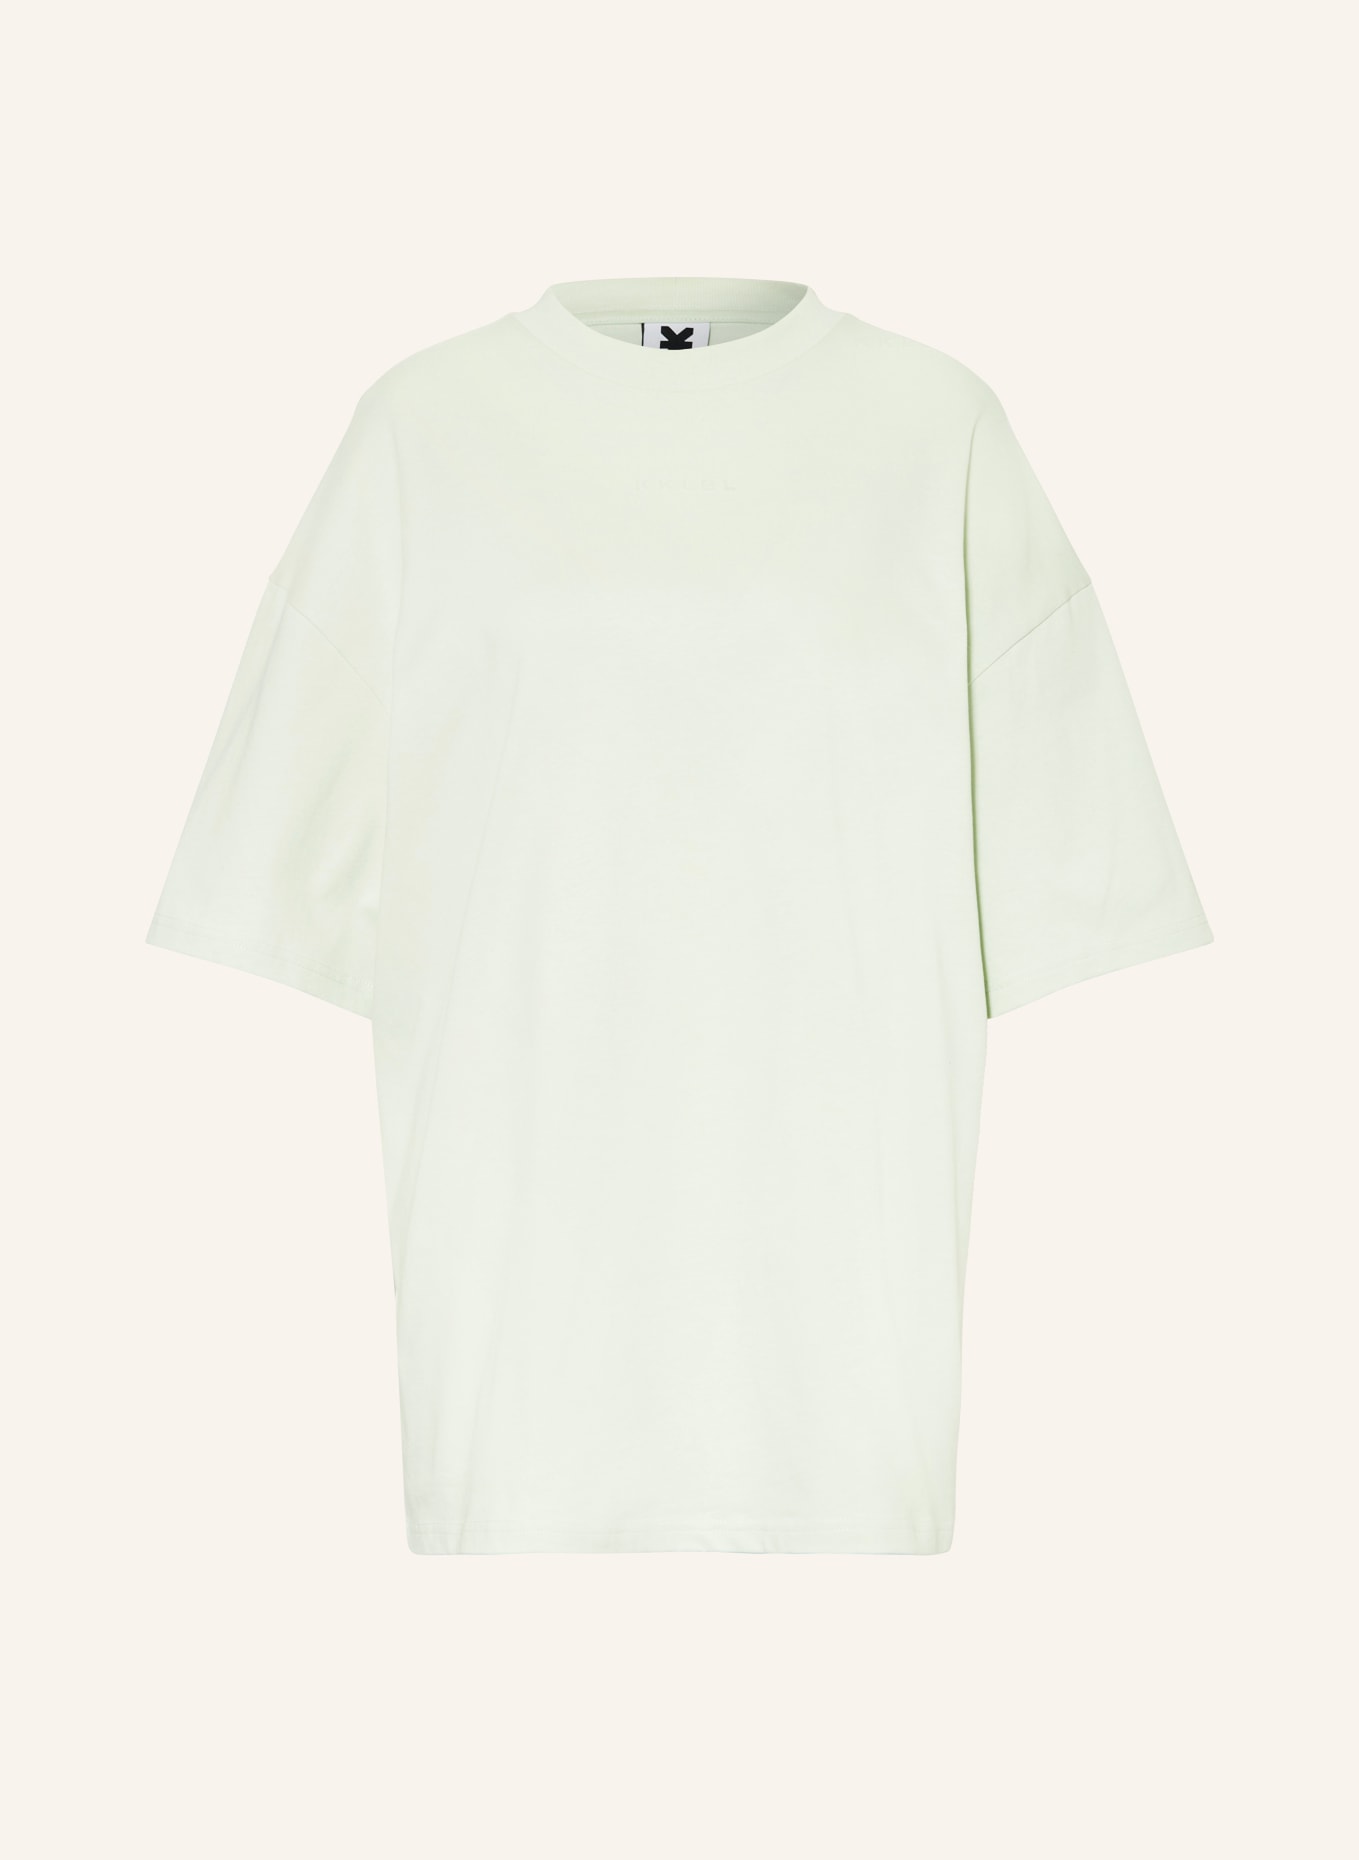 KARO KAUER Oversized-Shirt, Farbe: MINT (Bild 1)